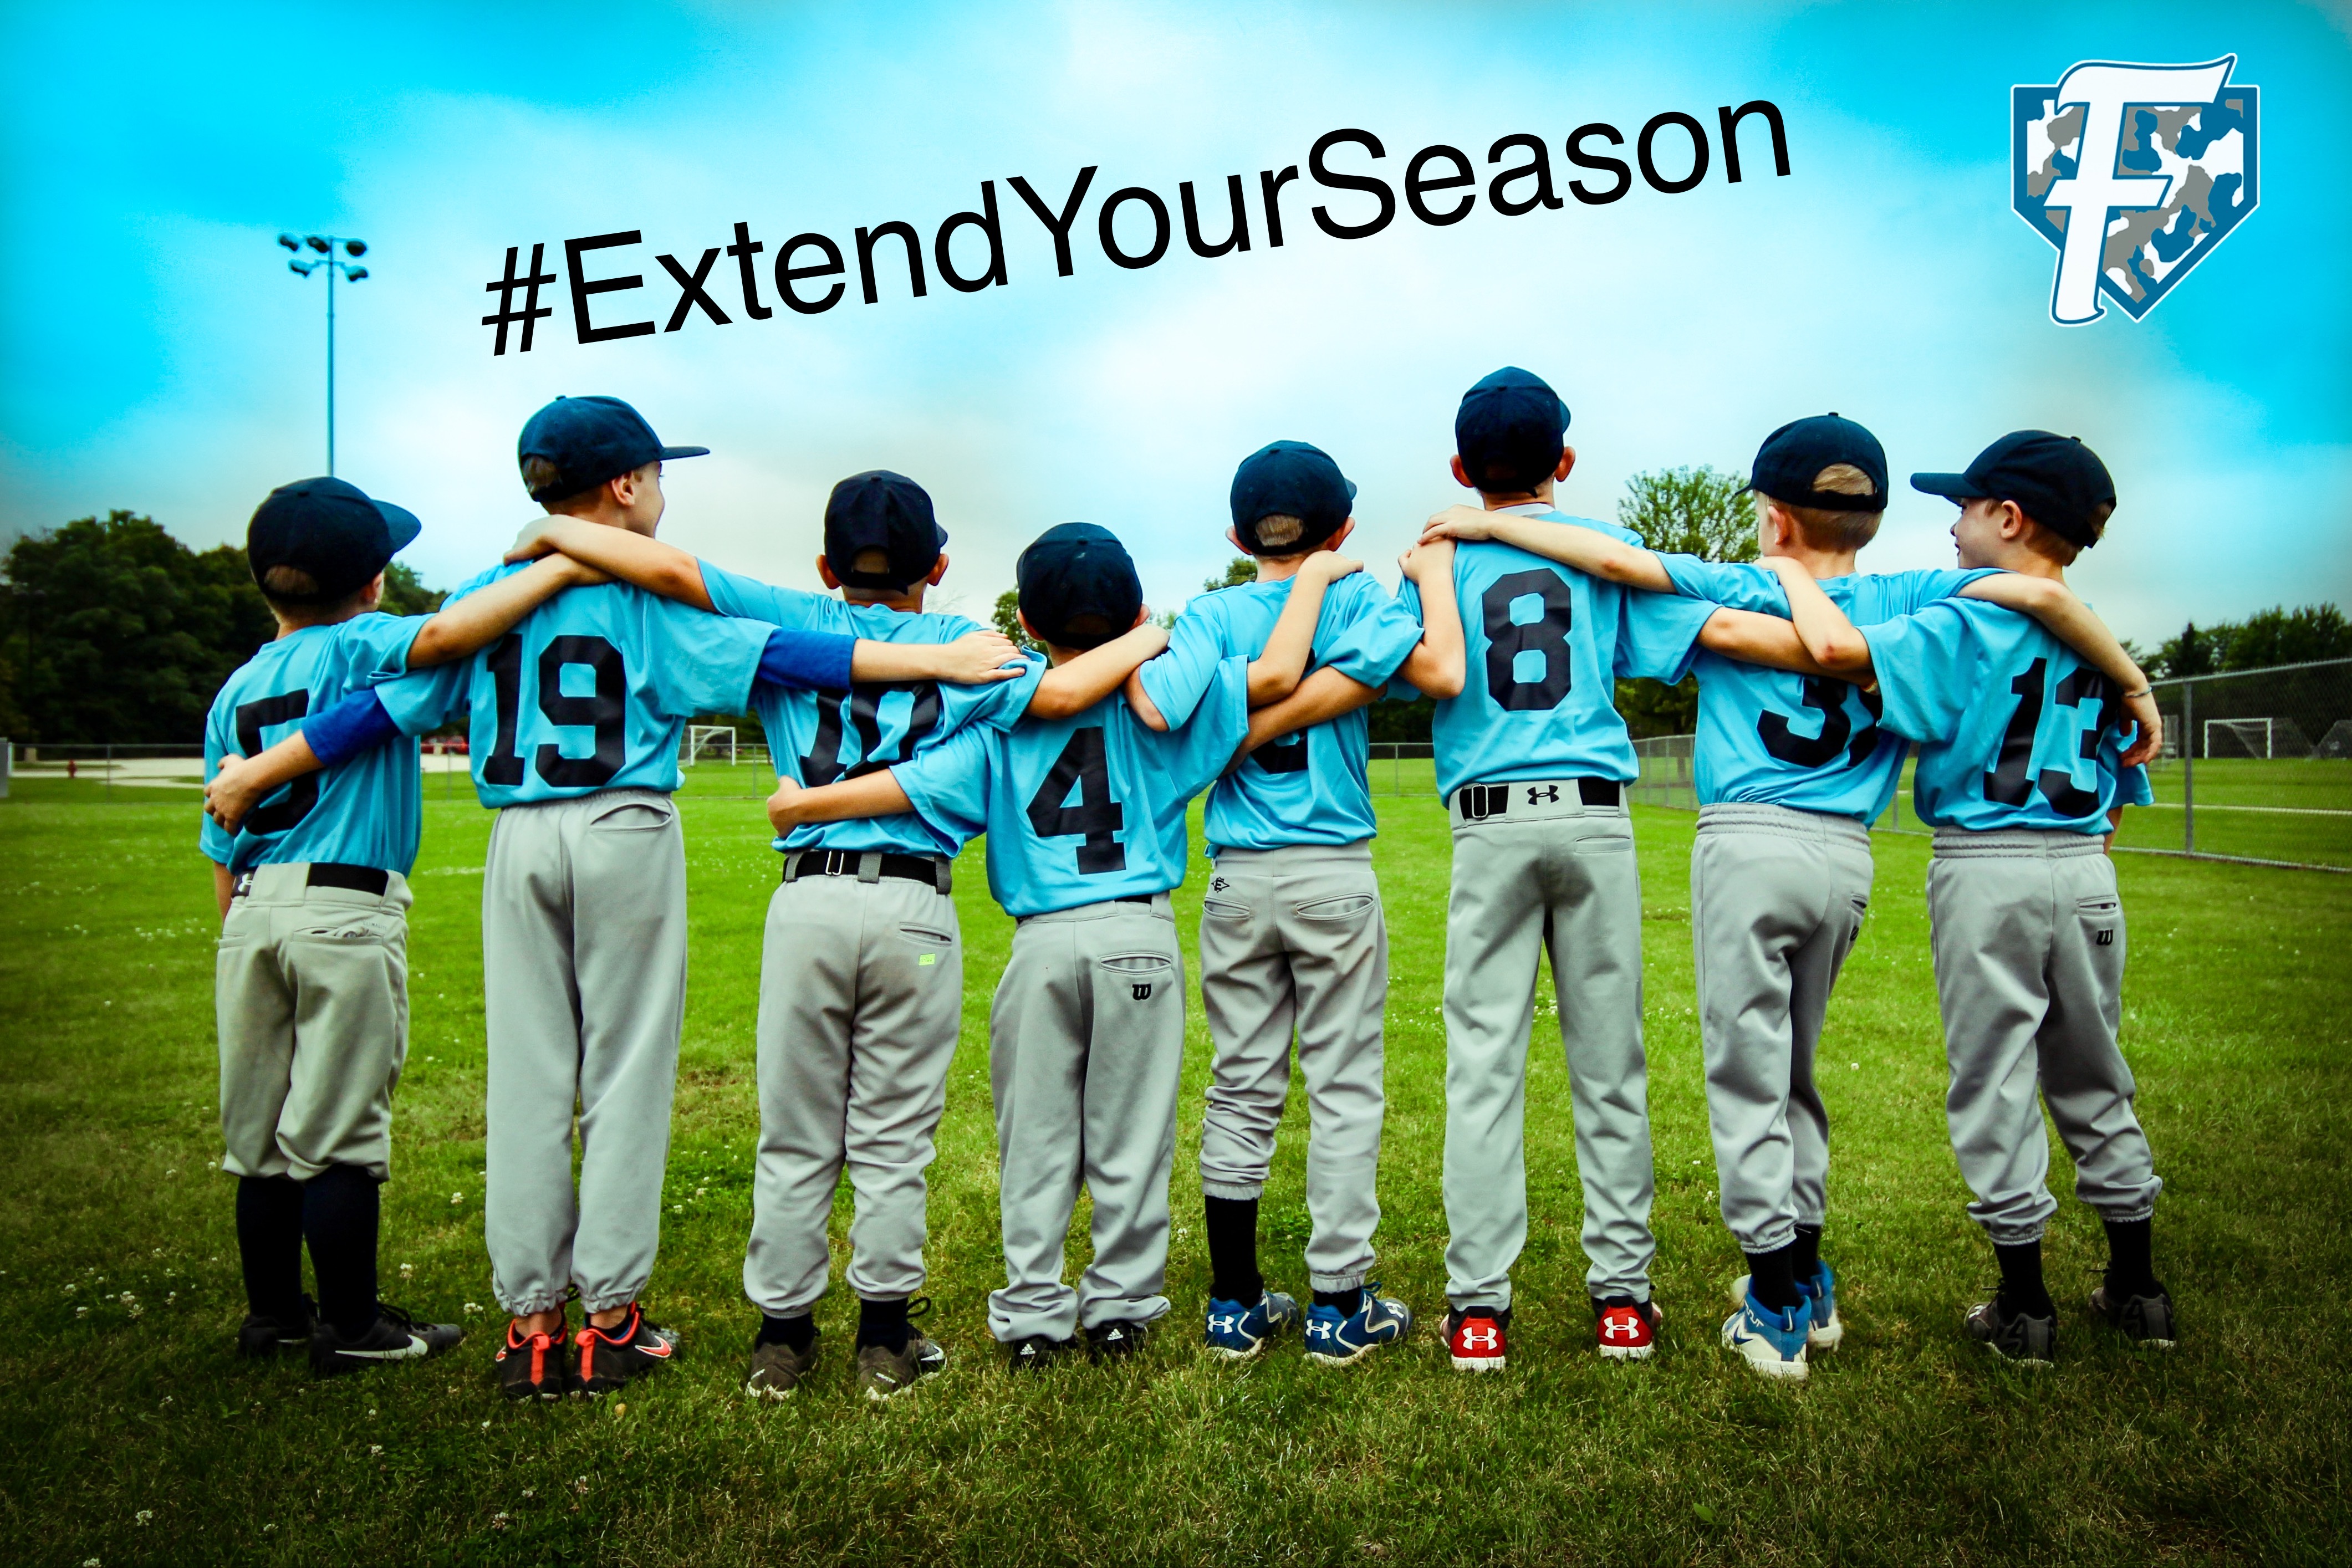 Extend Your Season!